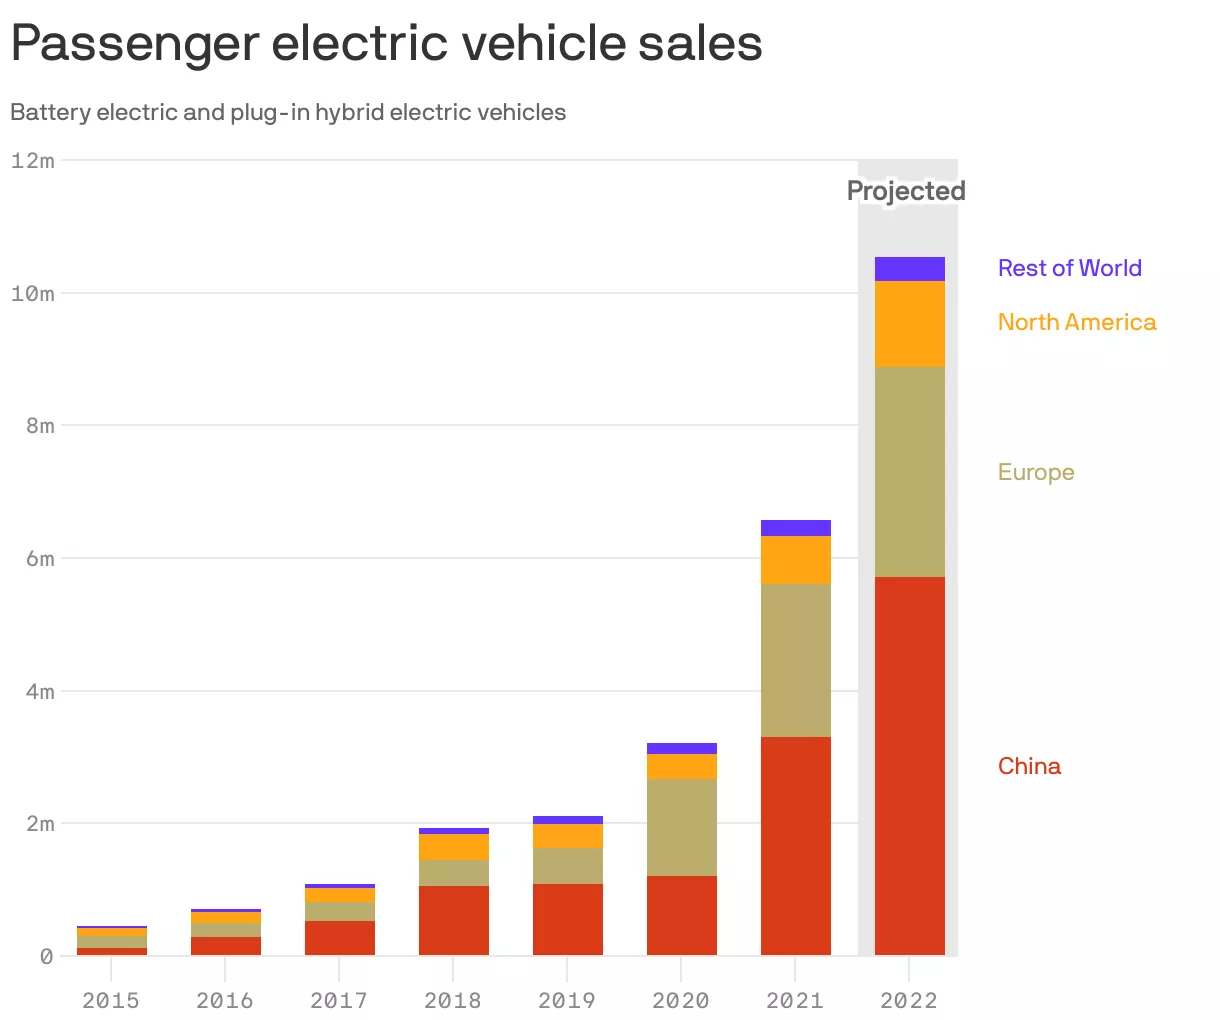 Passenger electric vehicle sales